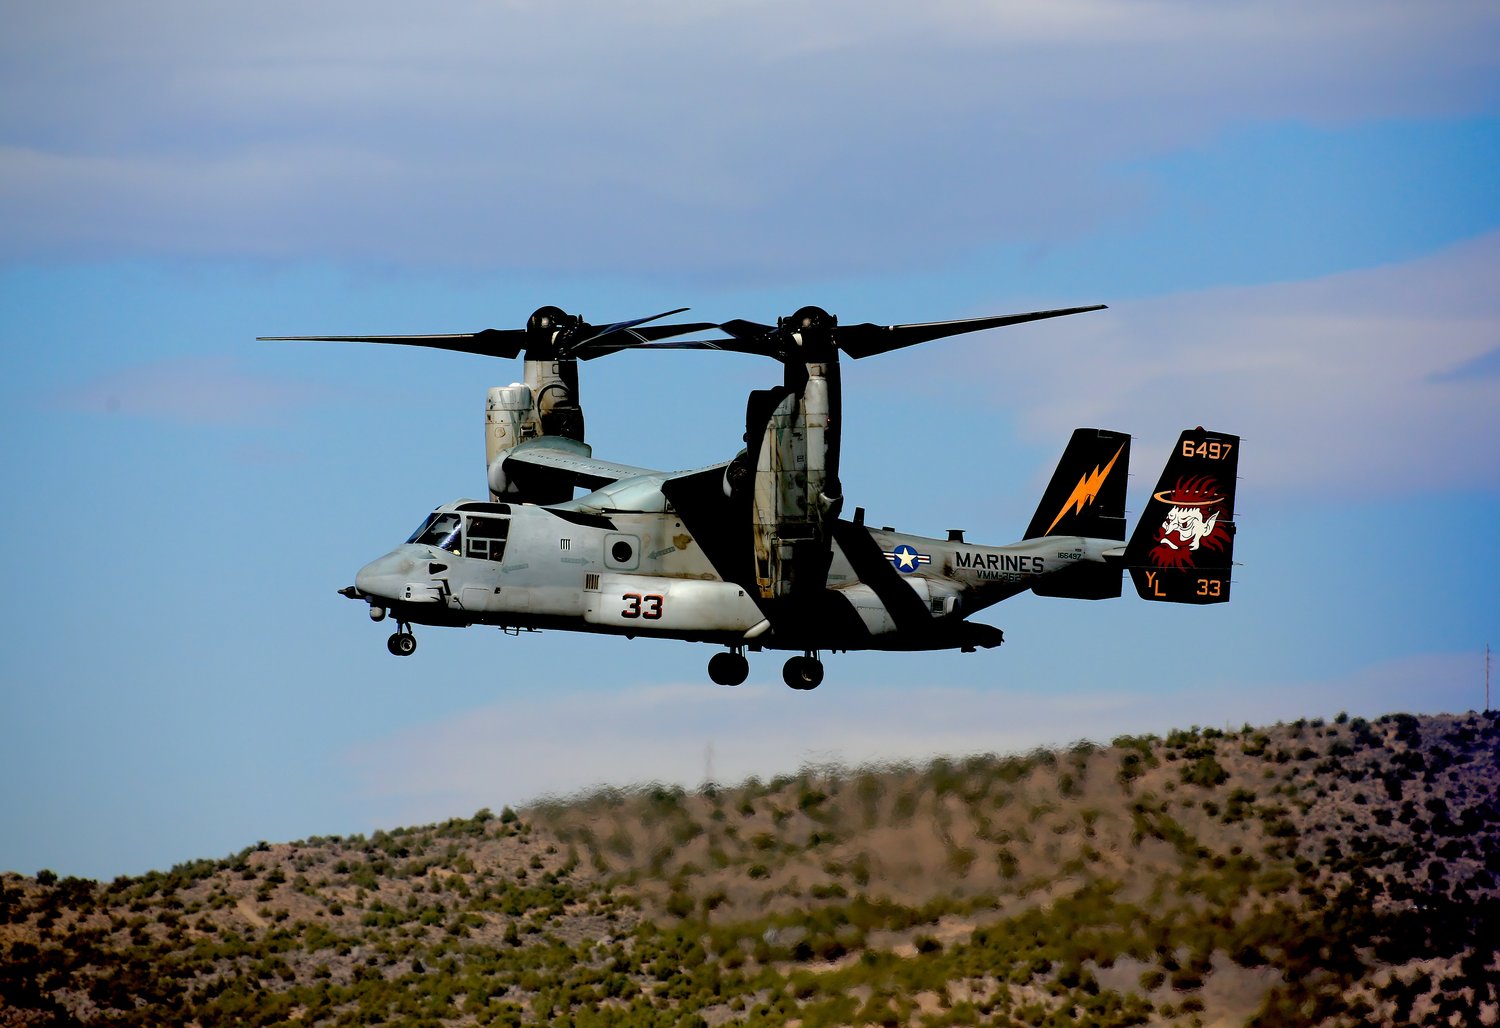 A U.S. Marine Corps chopper in action.